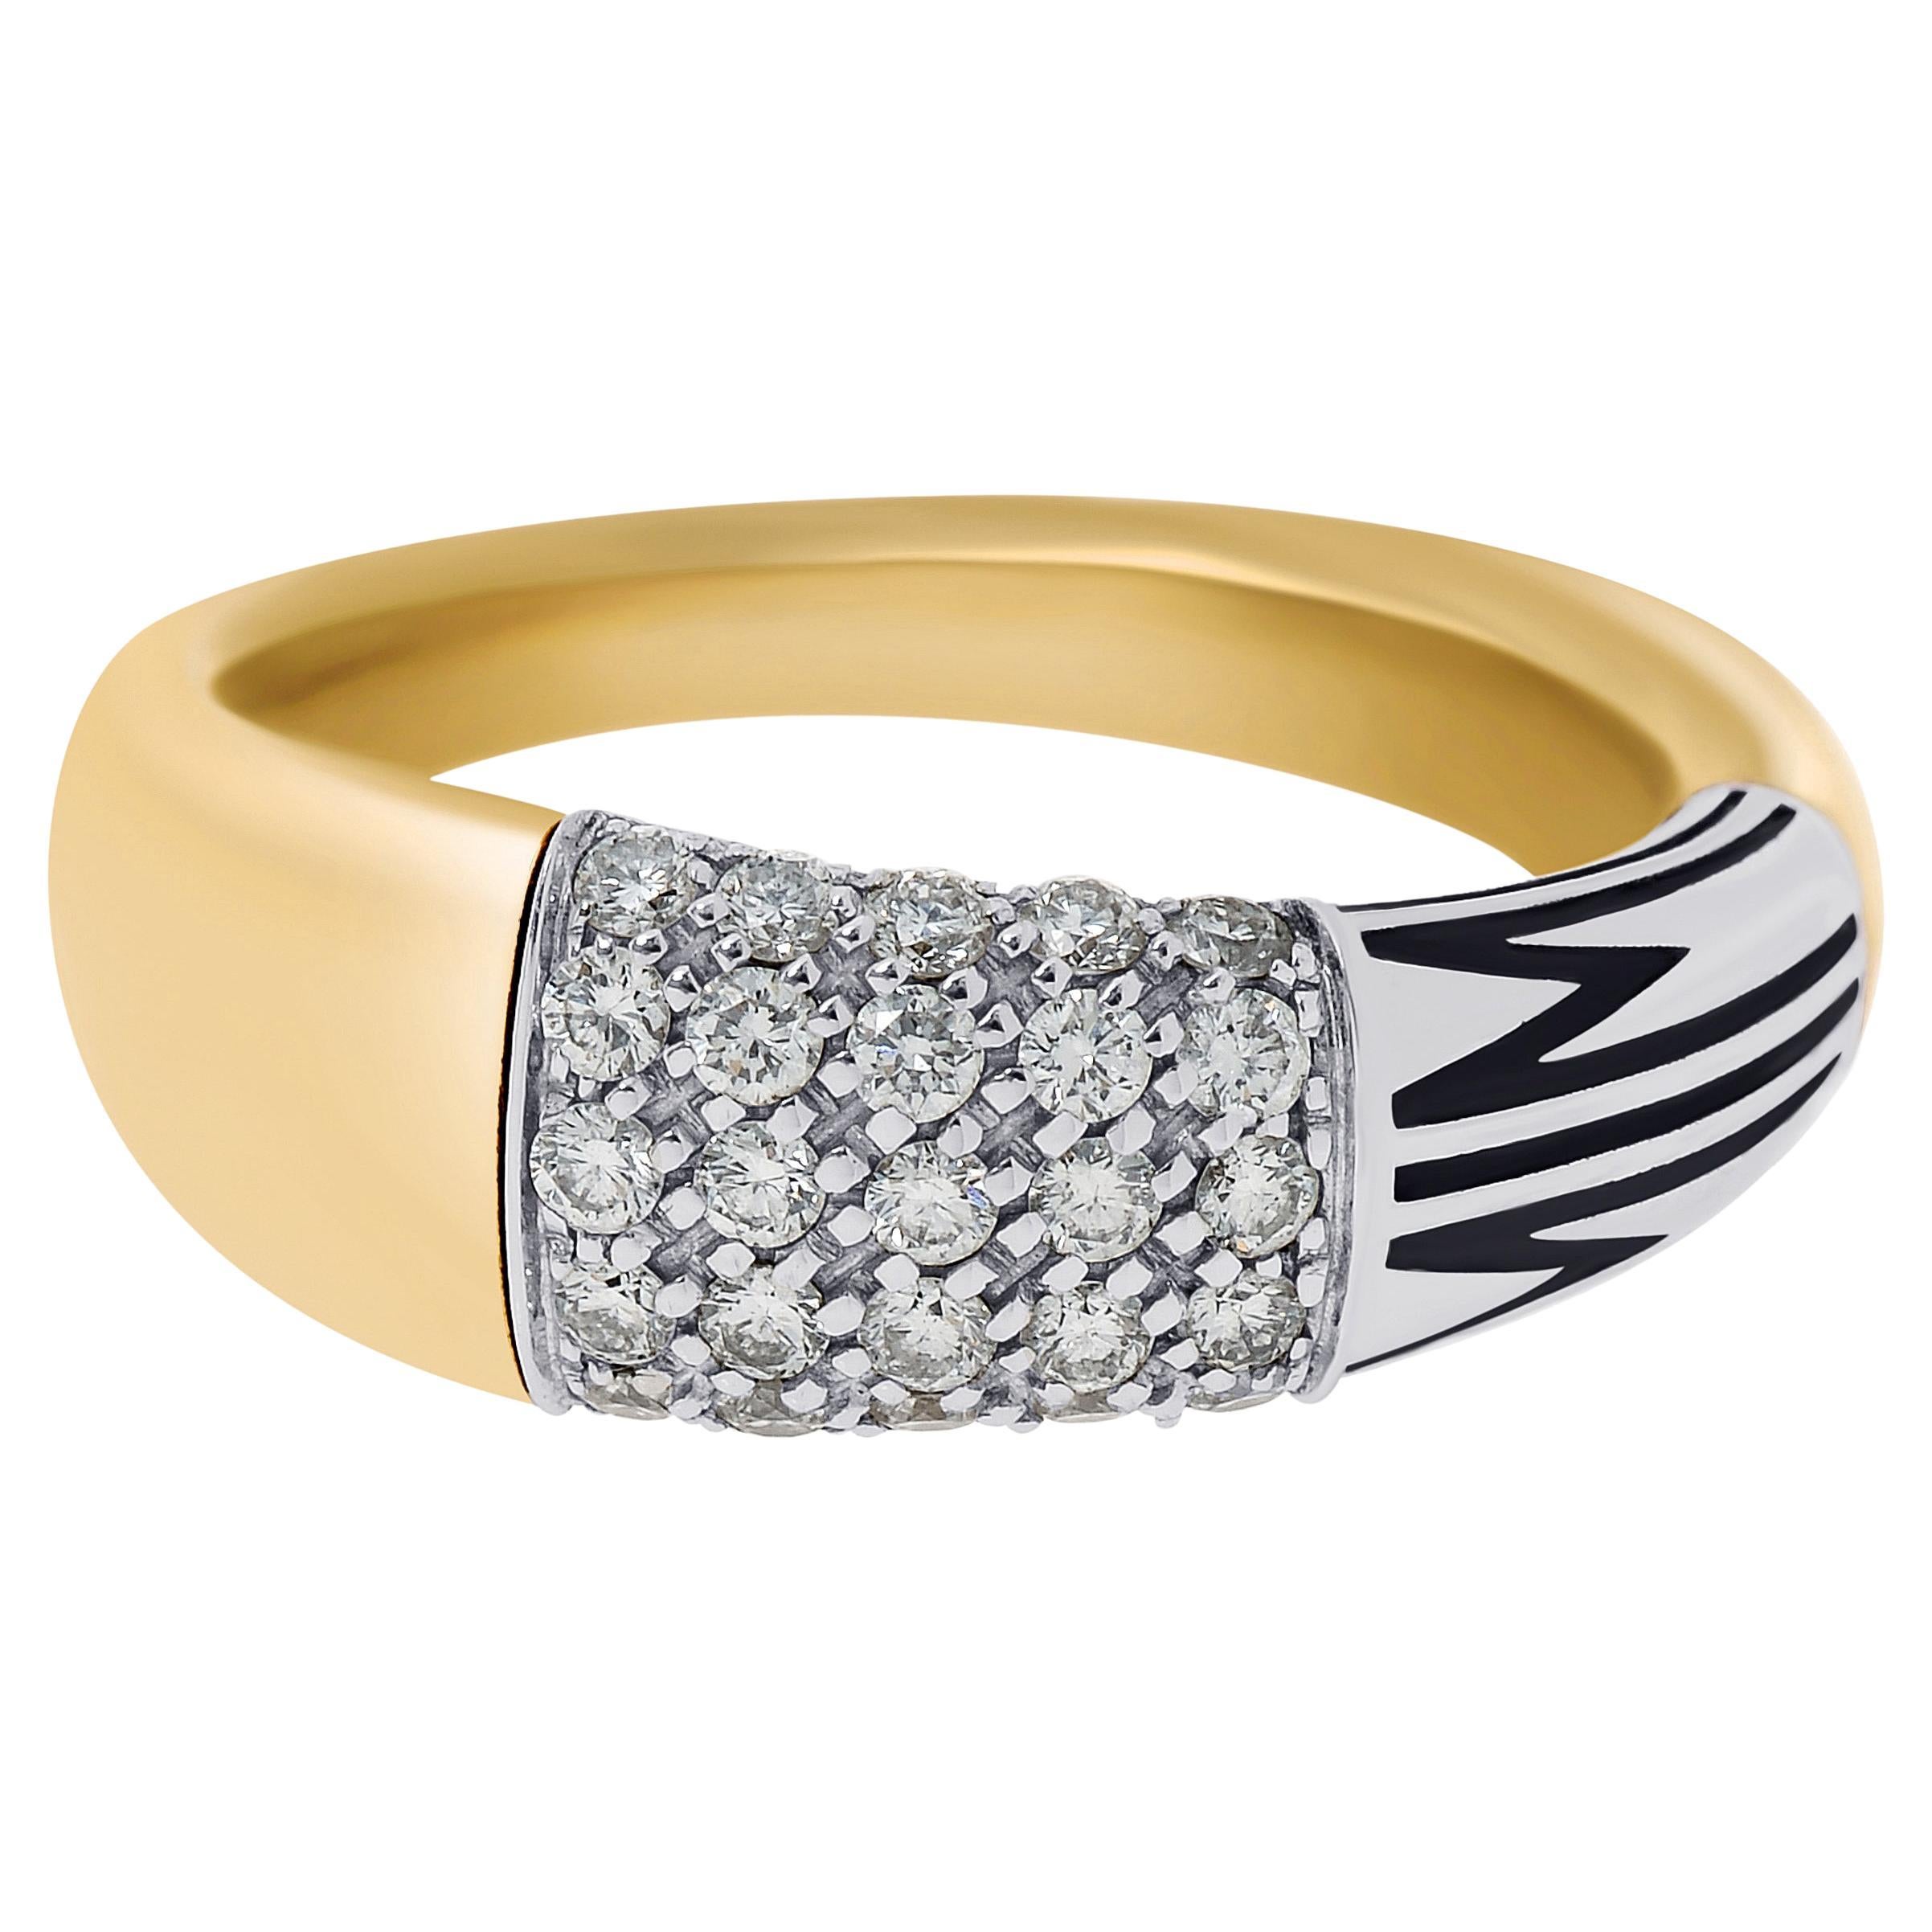 Mimi Milano Tam Tam 18K Gelb- & Weißgold, Diamantband Ring Sz. 7